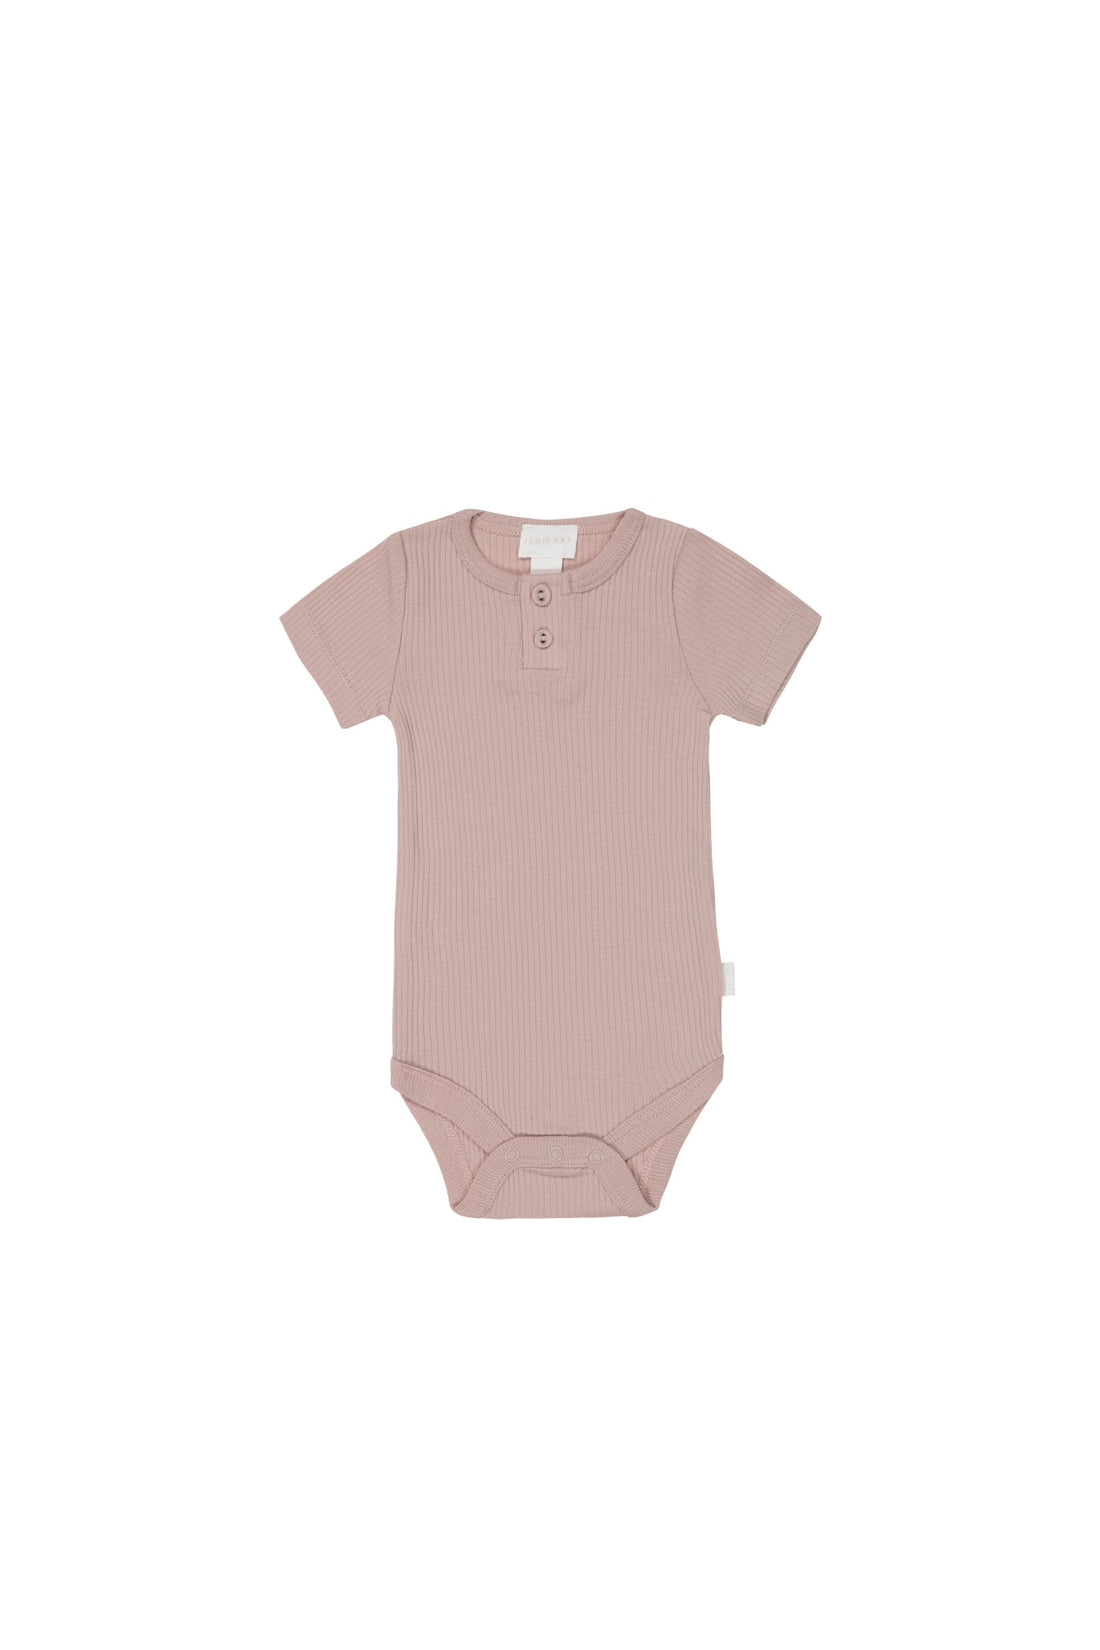 Organic Cotton Modal Darcy Rib Tee Bodysuit - Shell Pink Childrens Bodysuit from Jamie Kay USA